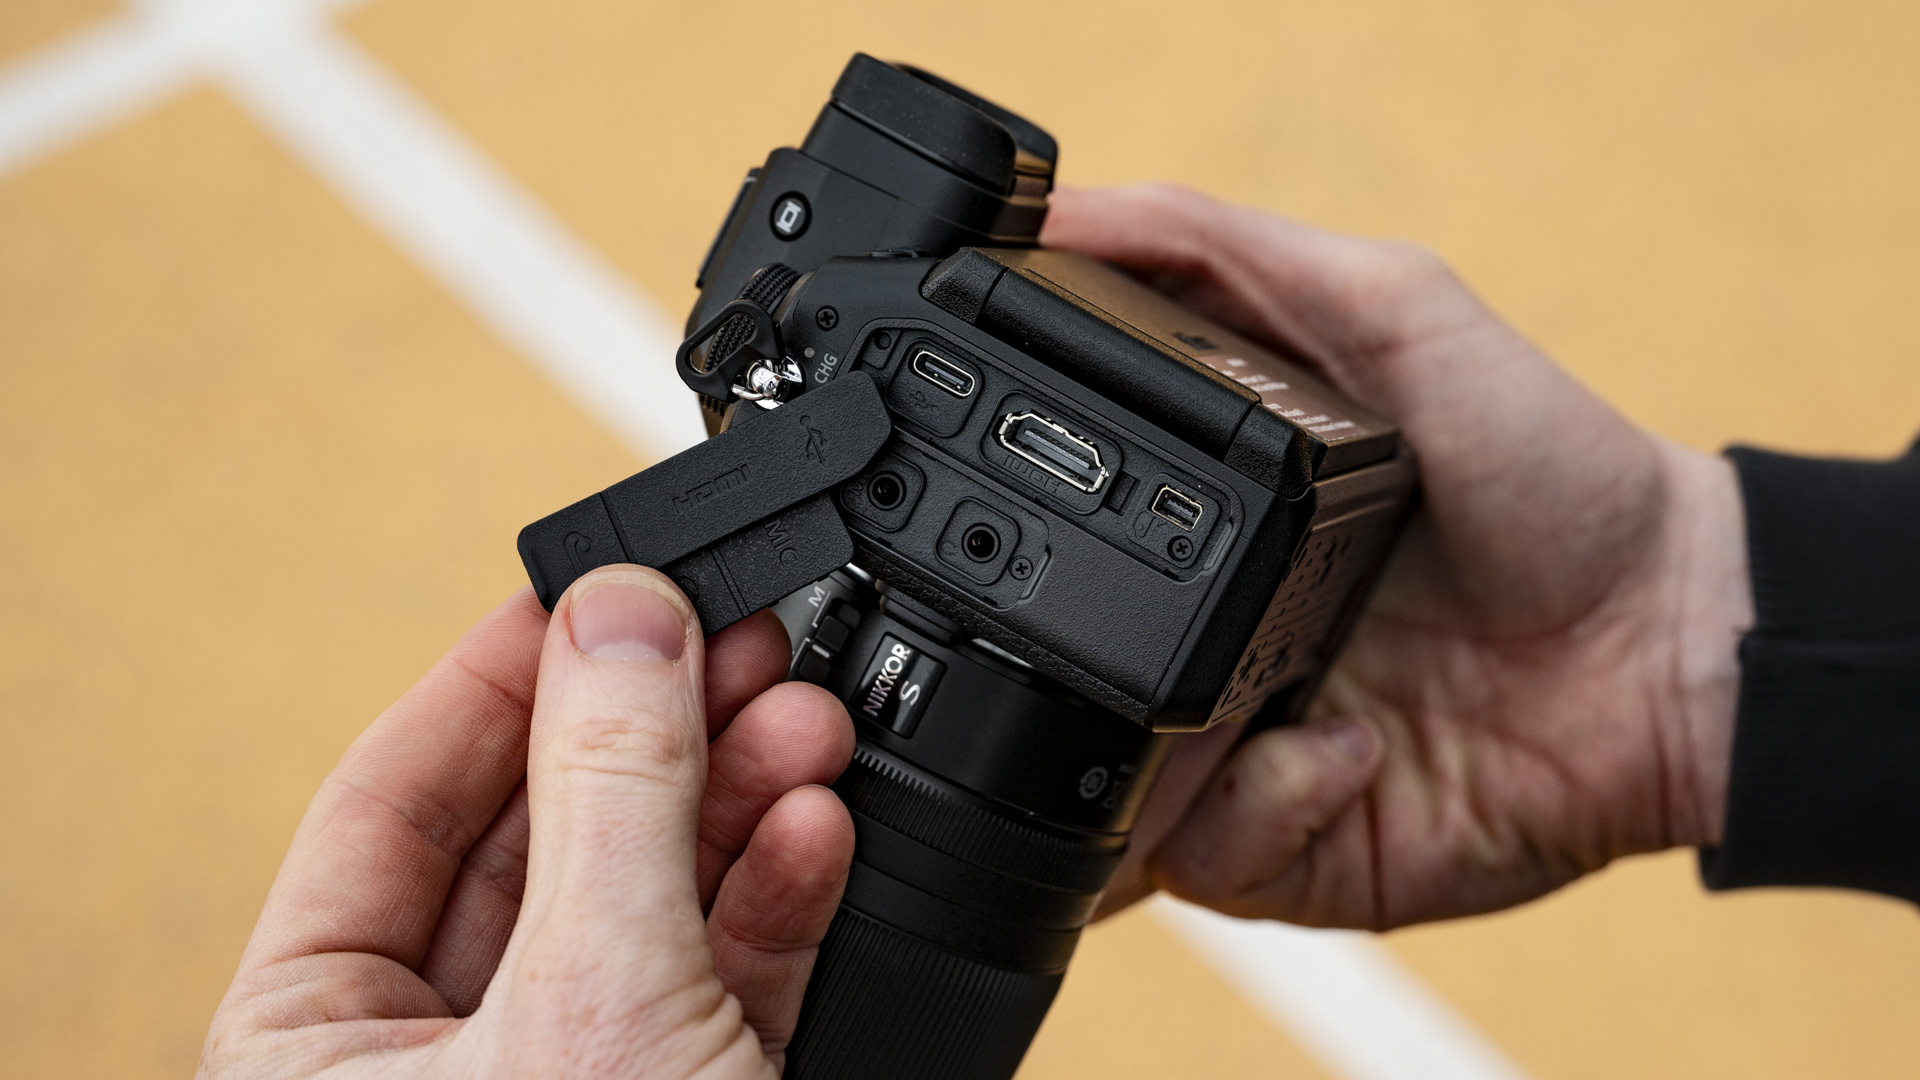 Nikon Z6 III camera's connection ports